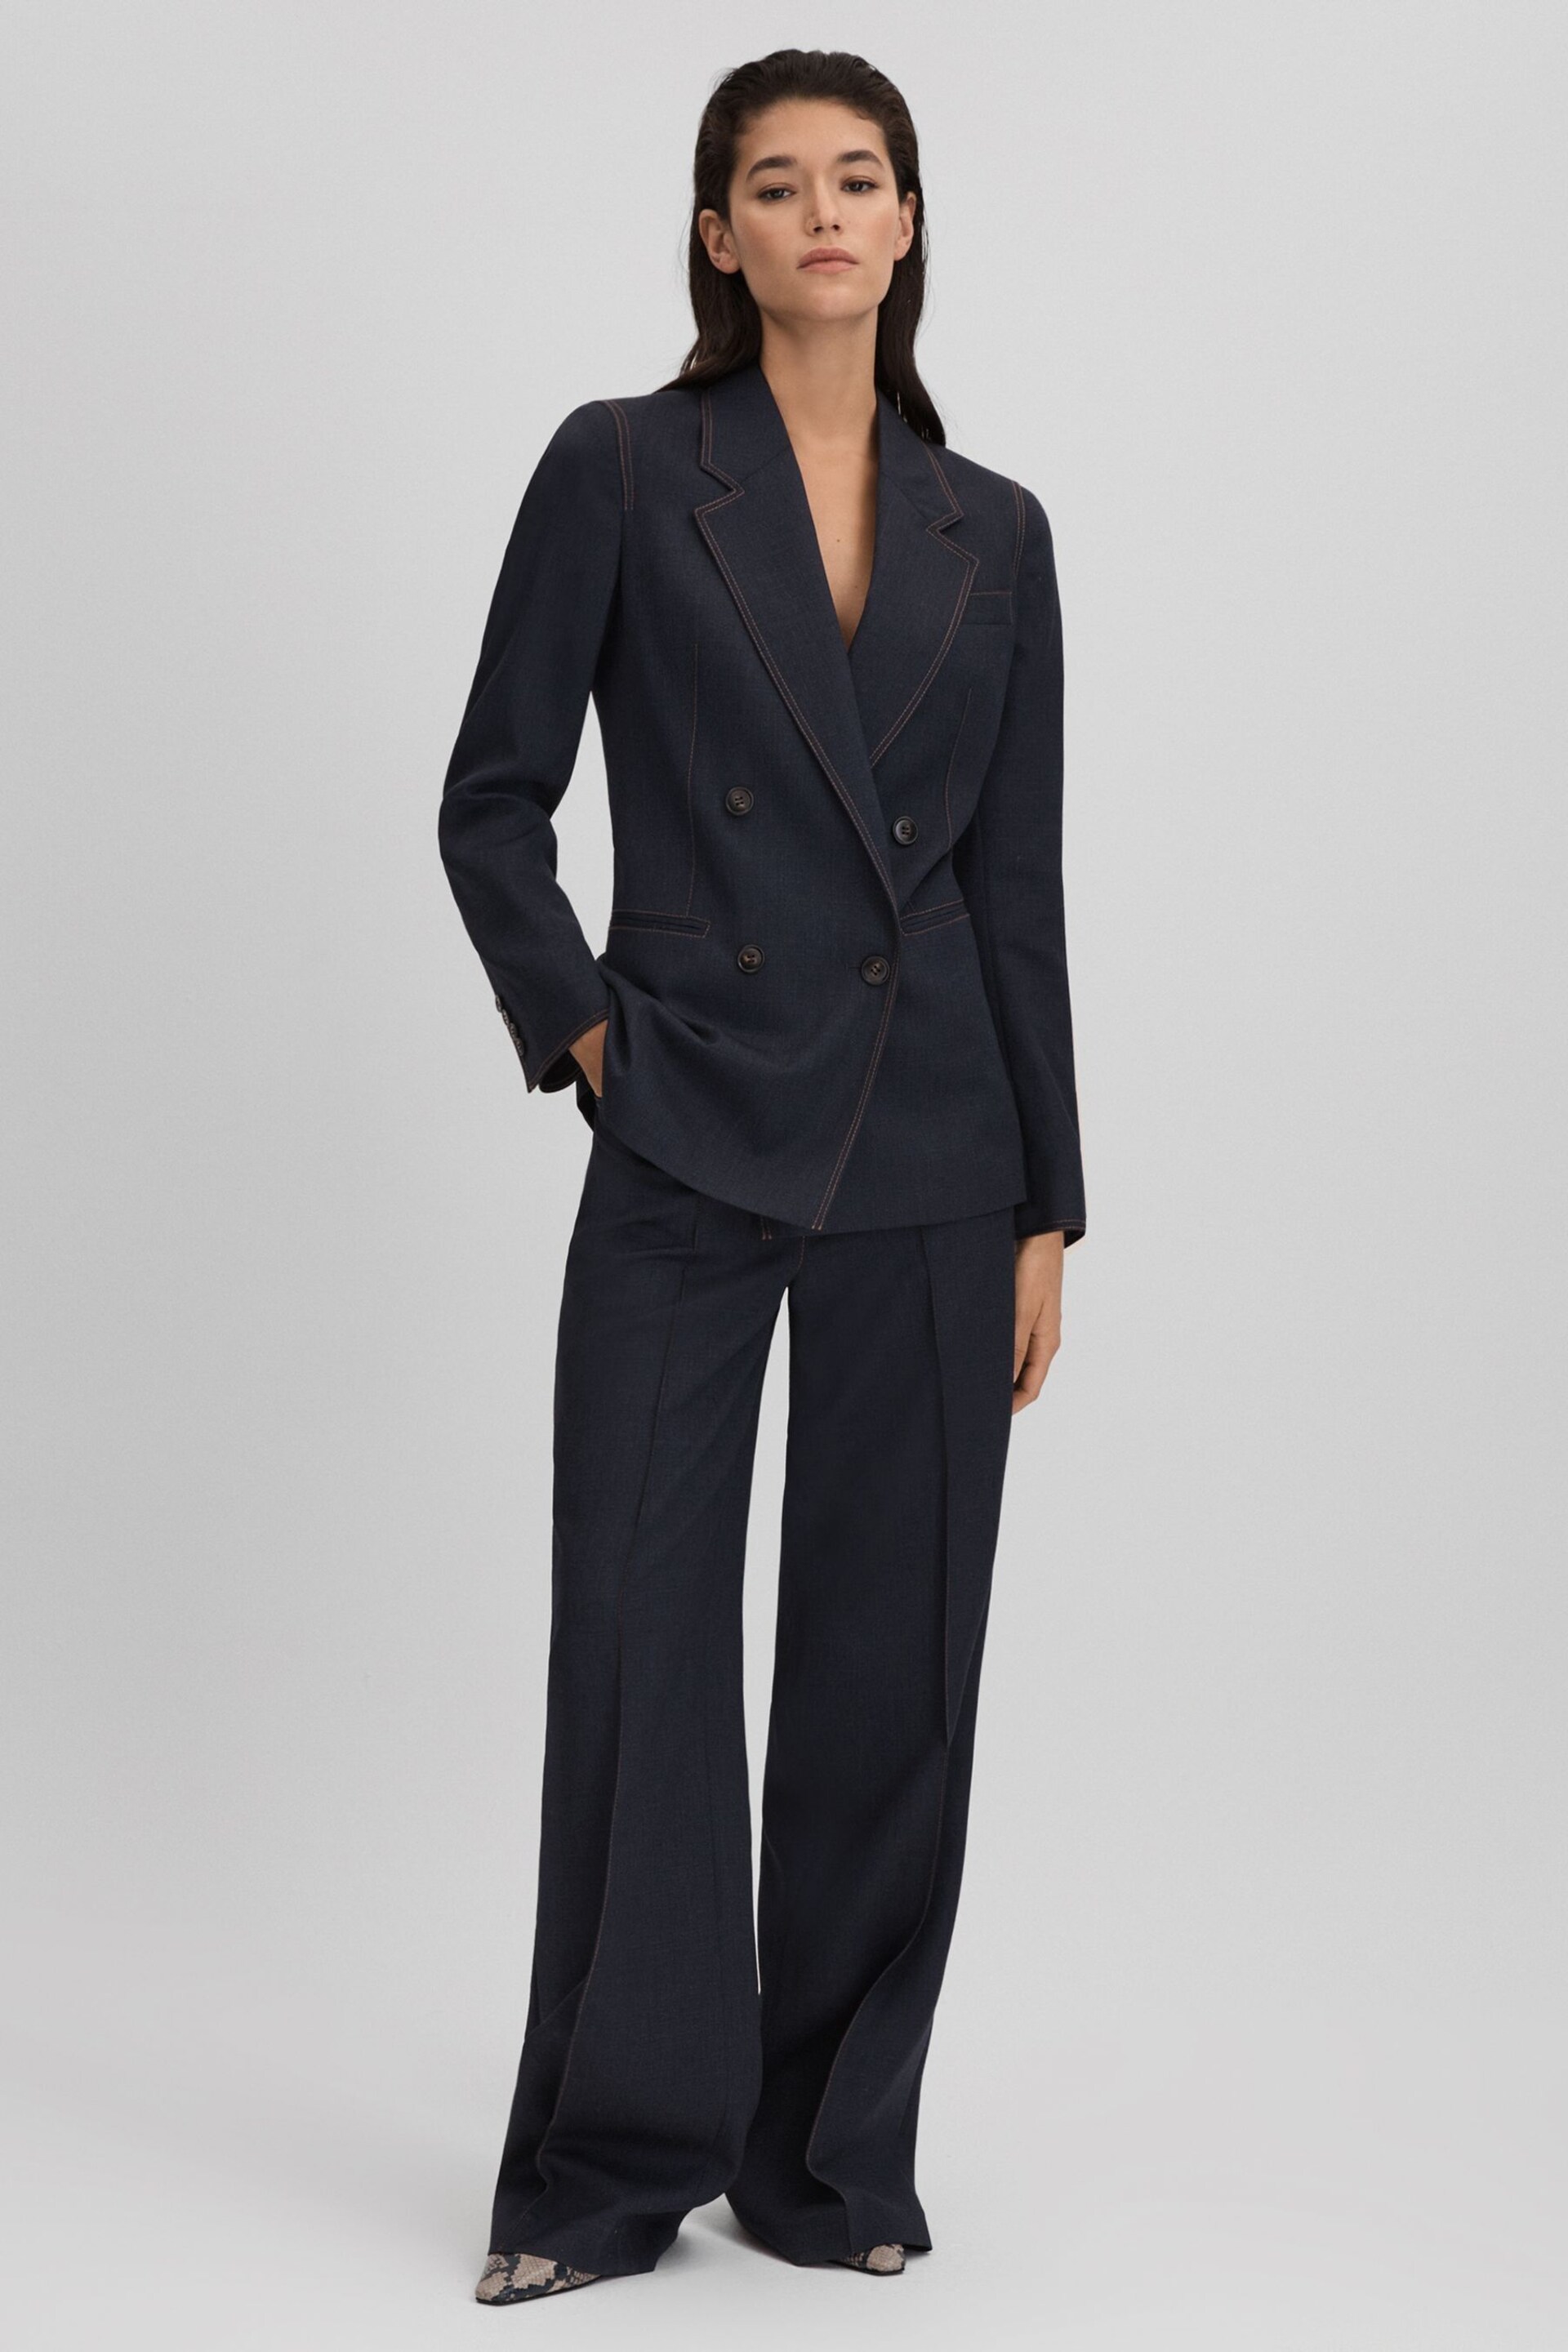 Reiss Navy Raven Wool Blend Denim Look Suit Blazer - Image 3 of 8